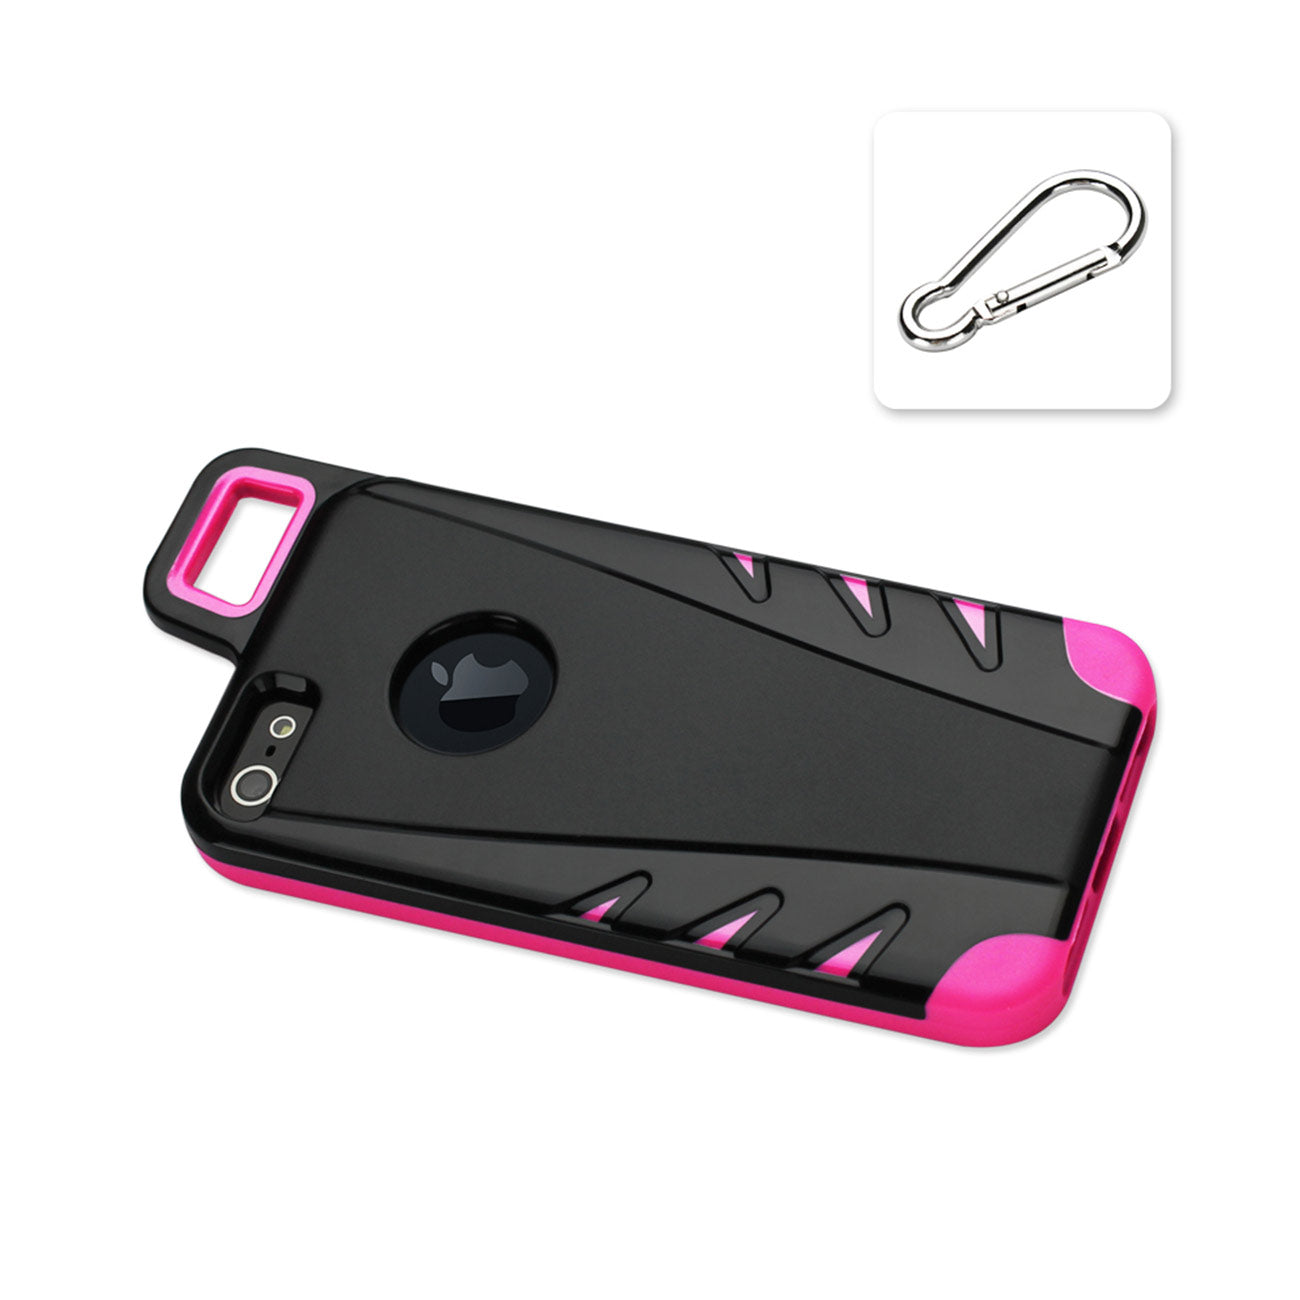 Case Hybrid iPhone 5/ 5S/ SE Drop Proof Workout With Hook Black Hot Pink Color